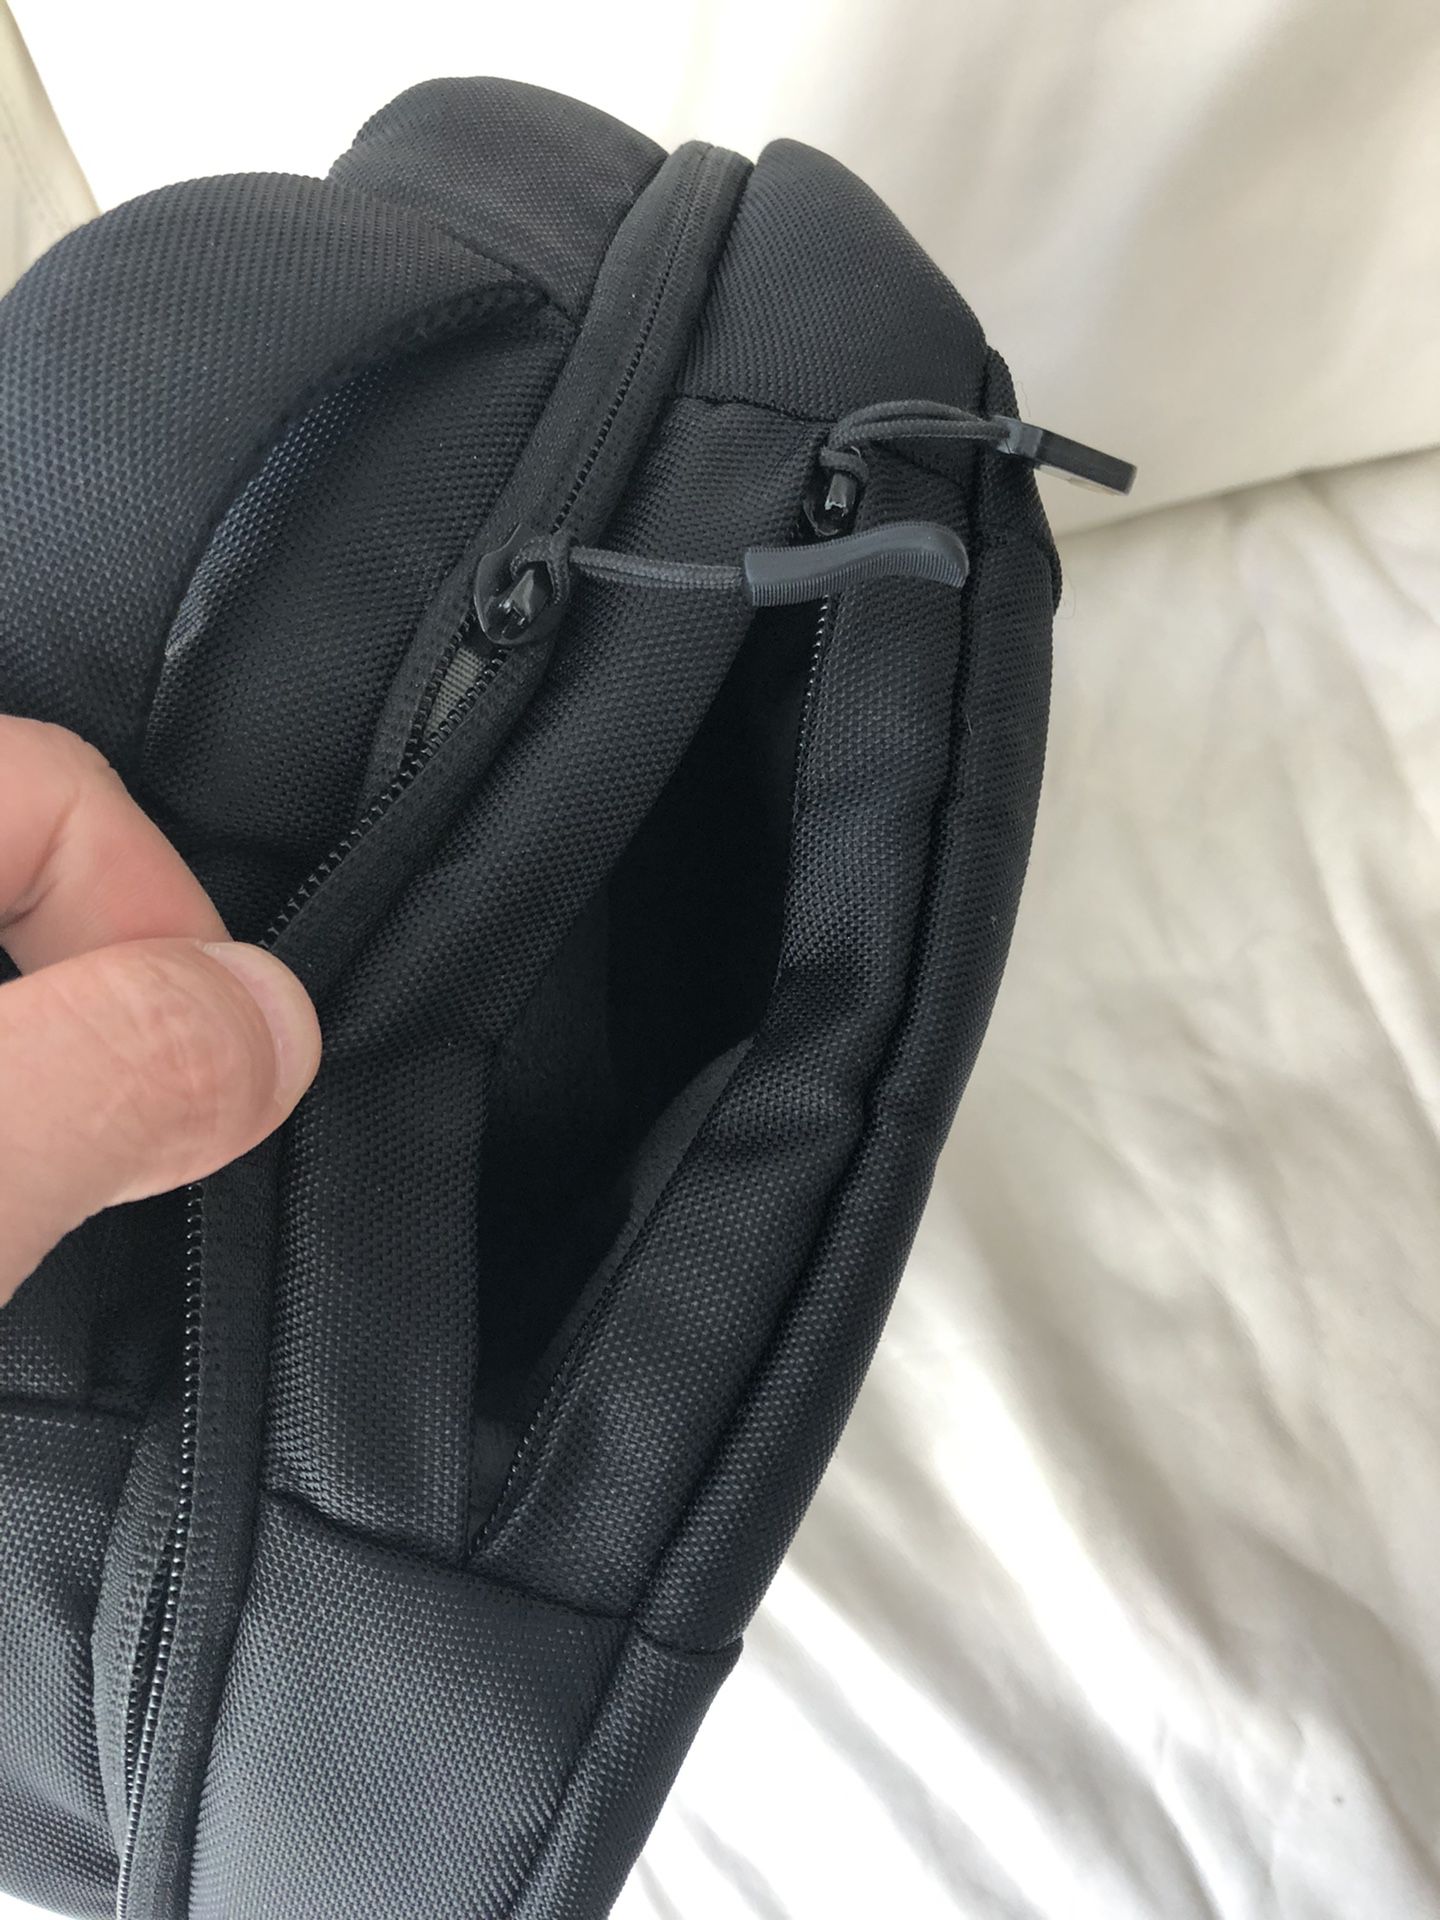 Incase Laptop Backpack